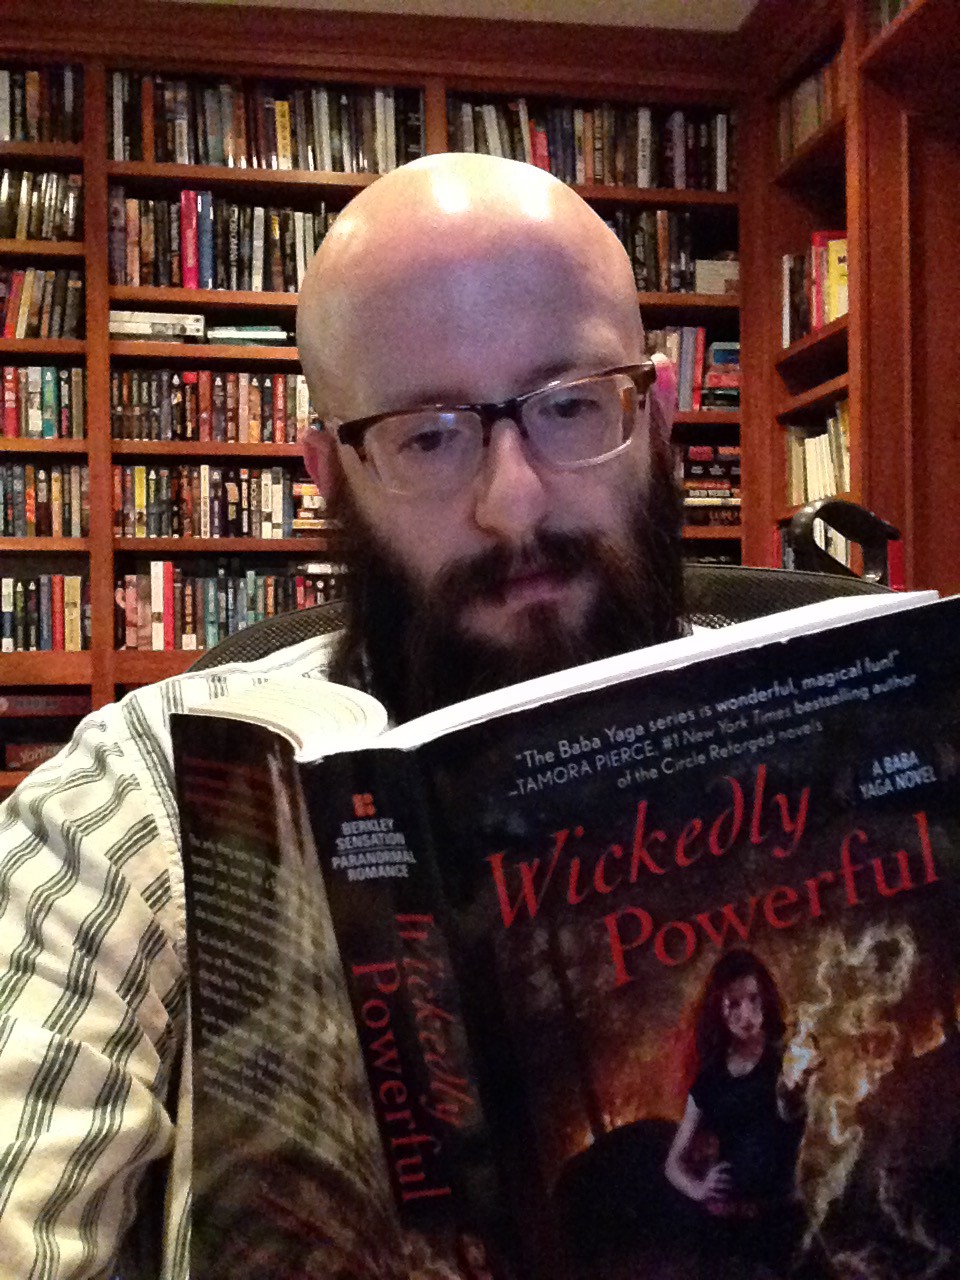 Jim, reading Wickedly Powerful